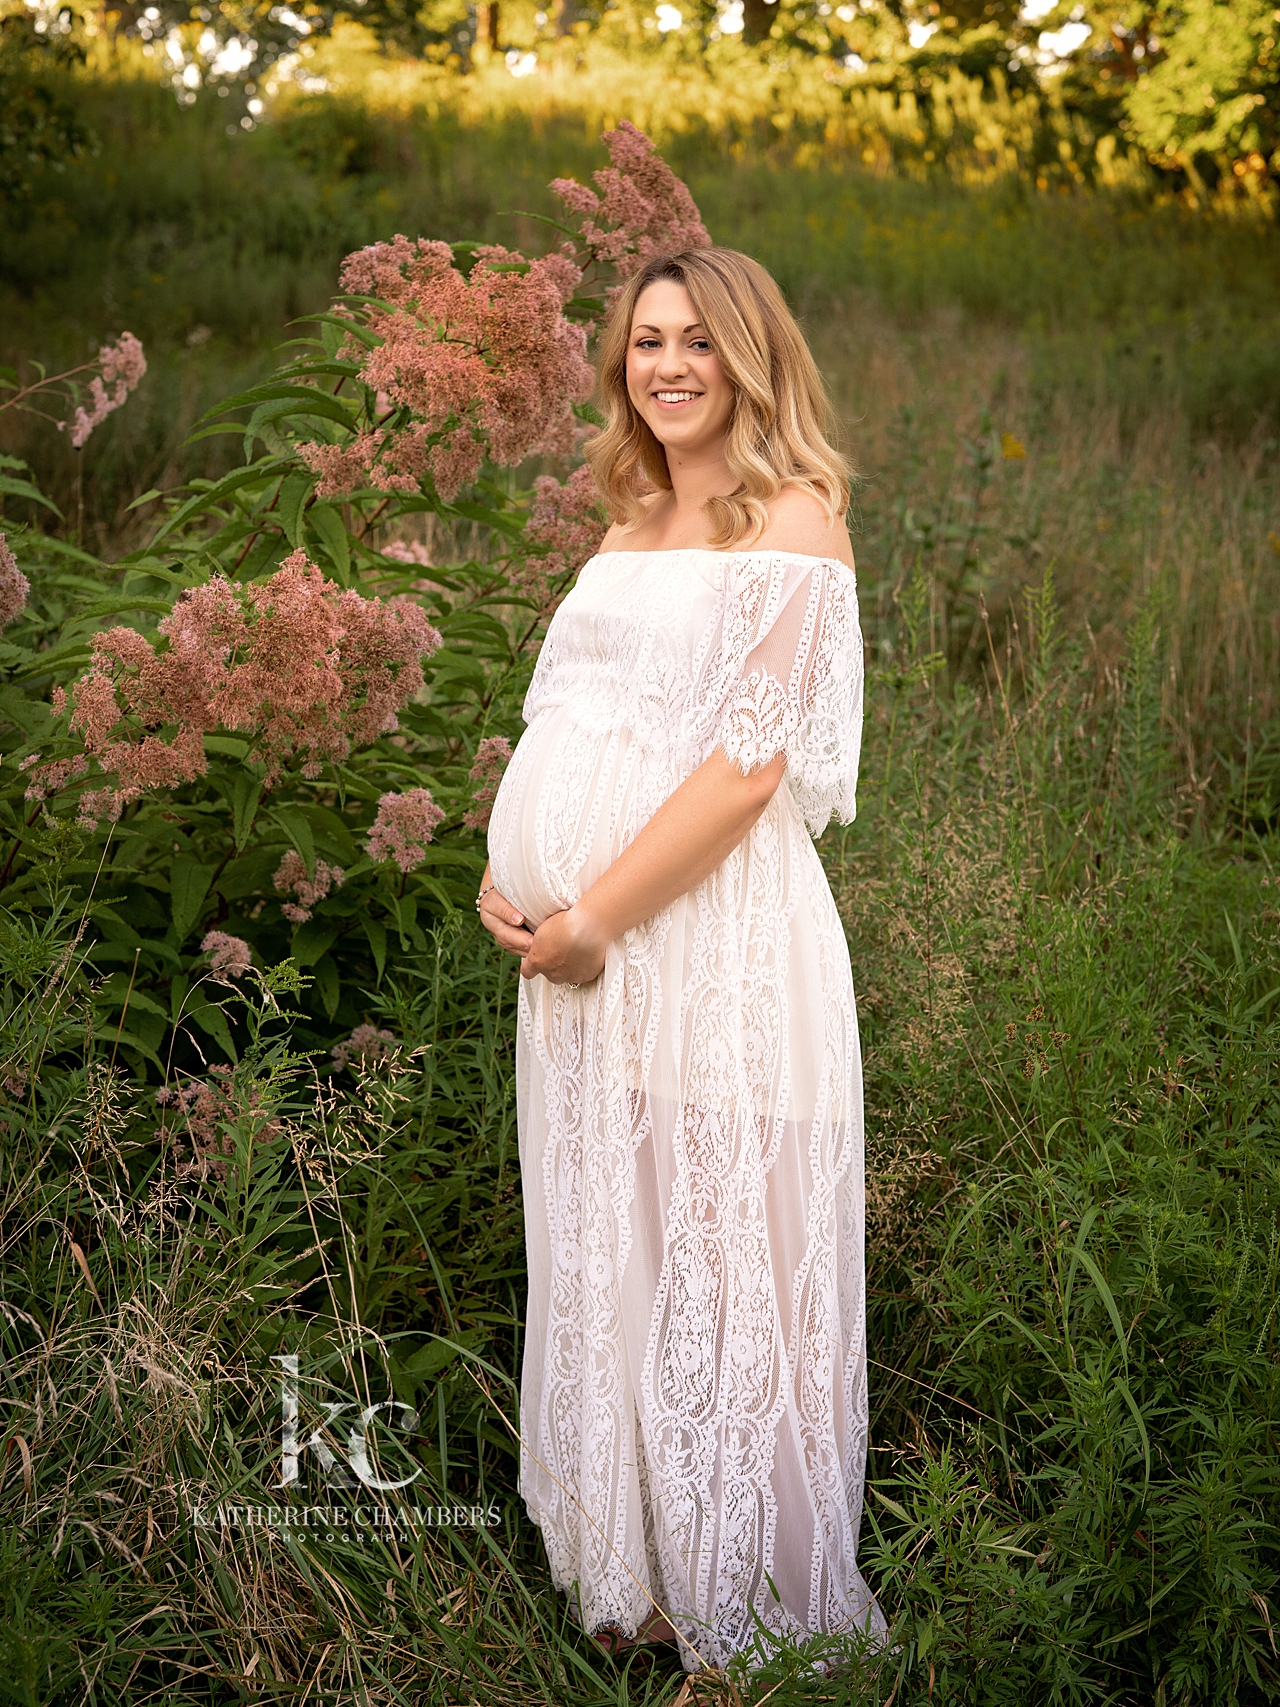 Avon Ohio Maternity Photographer